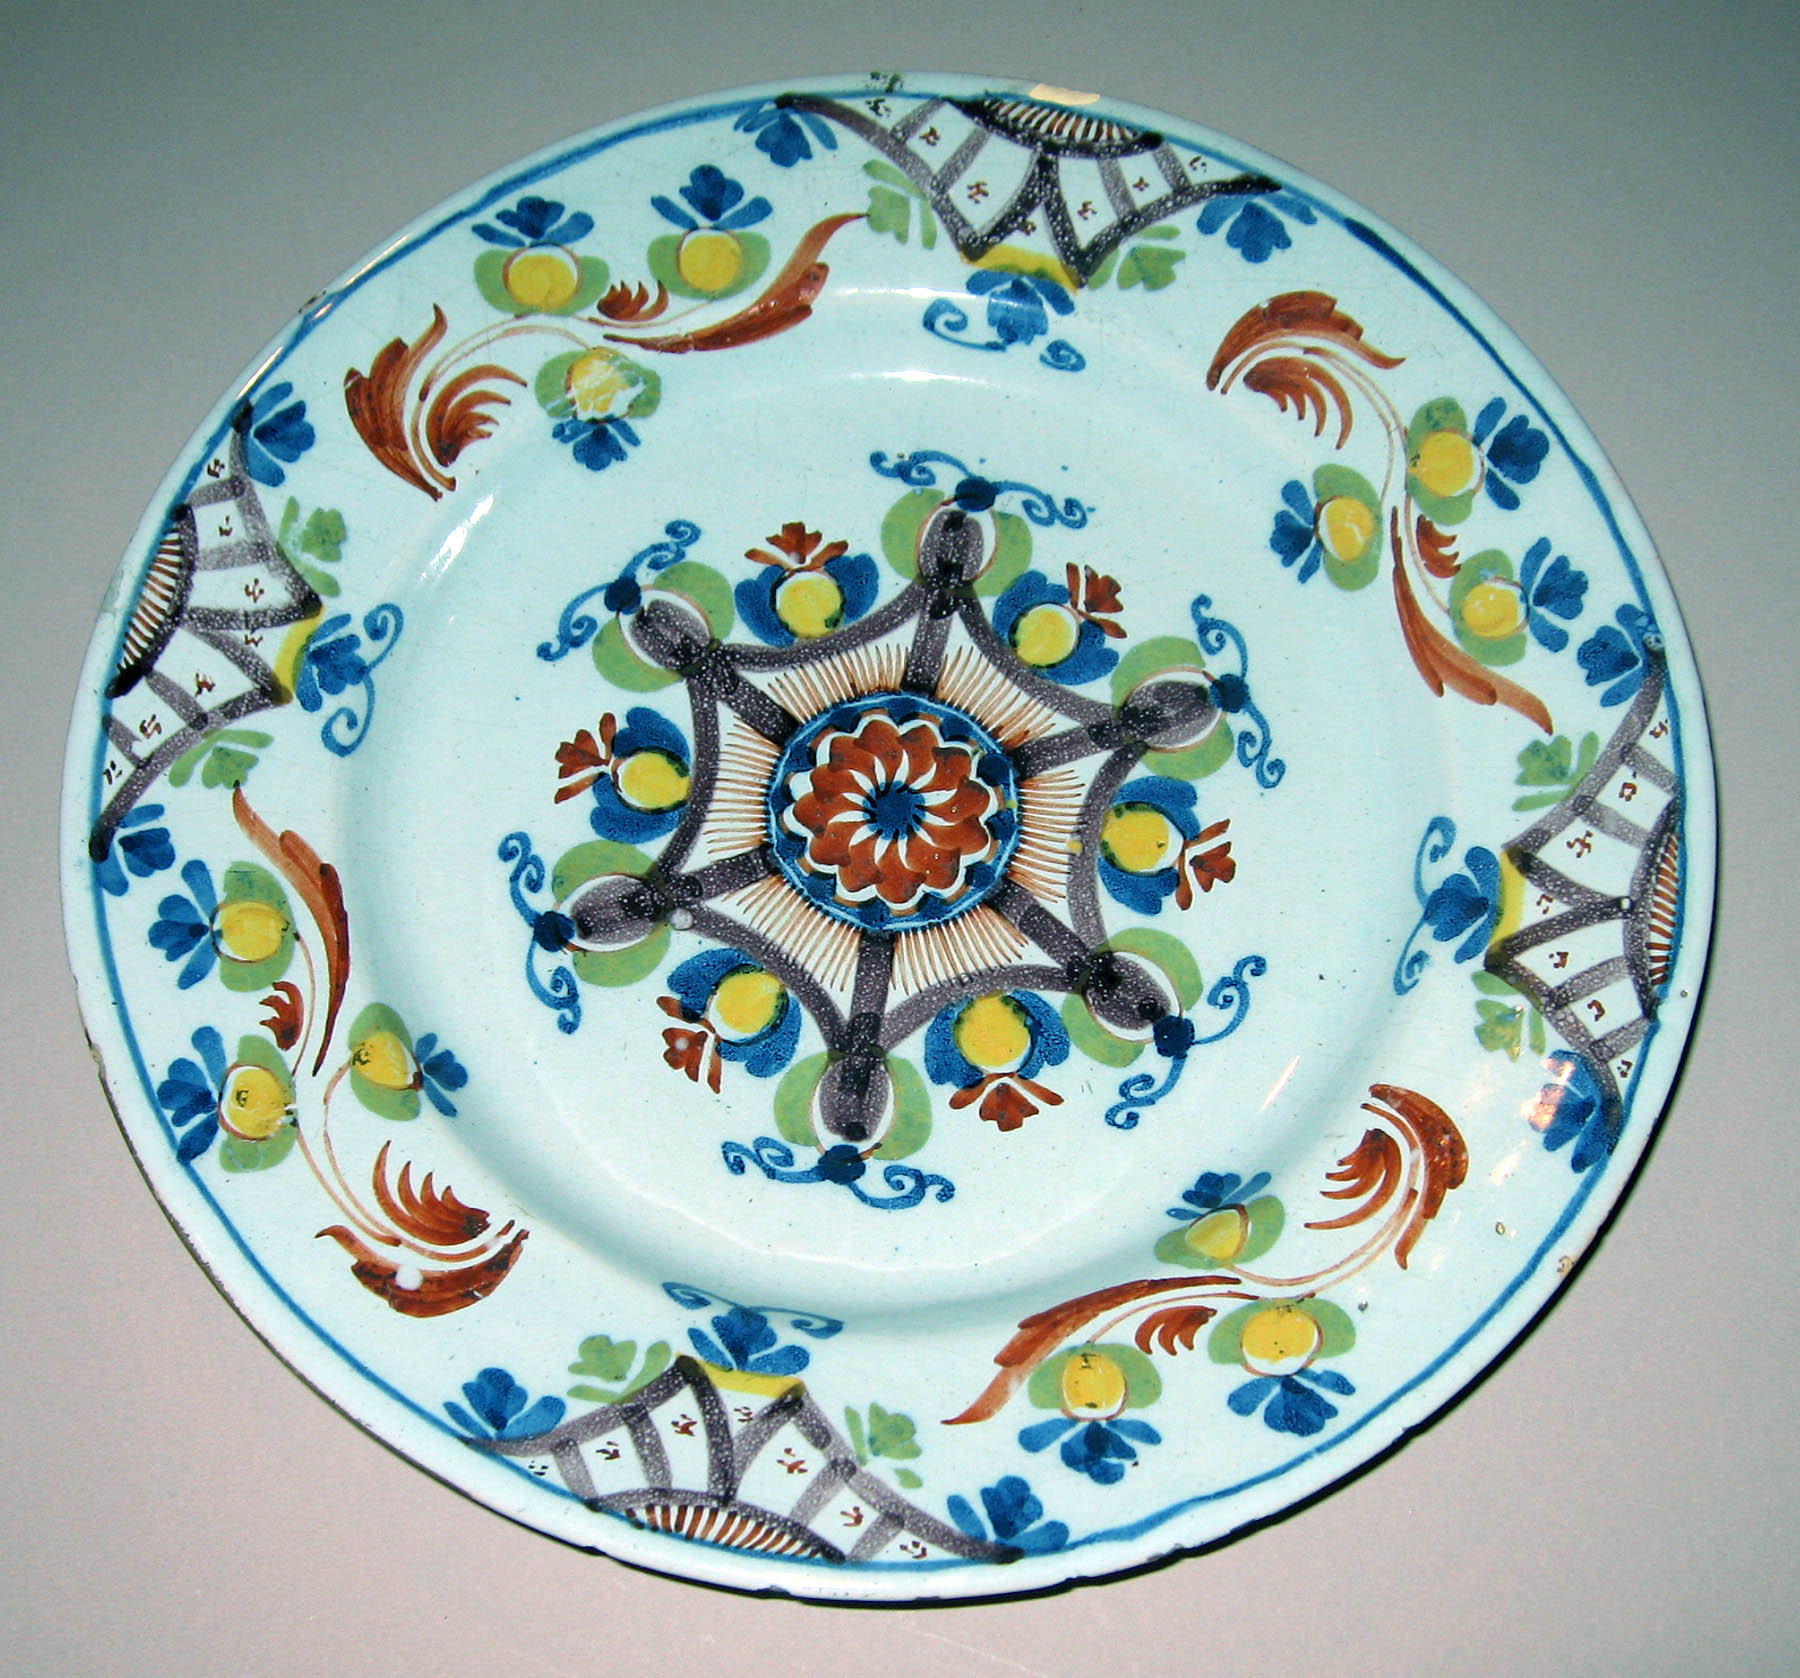 1963.0556.002 Delftware plate